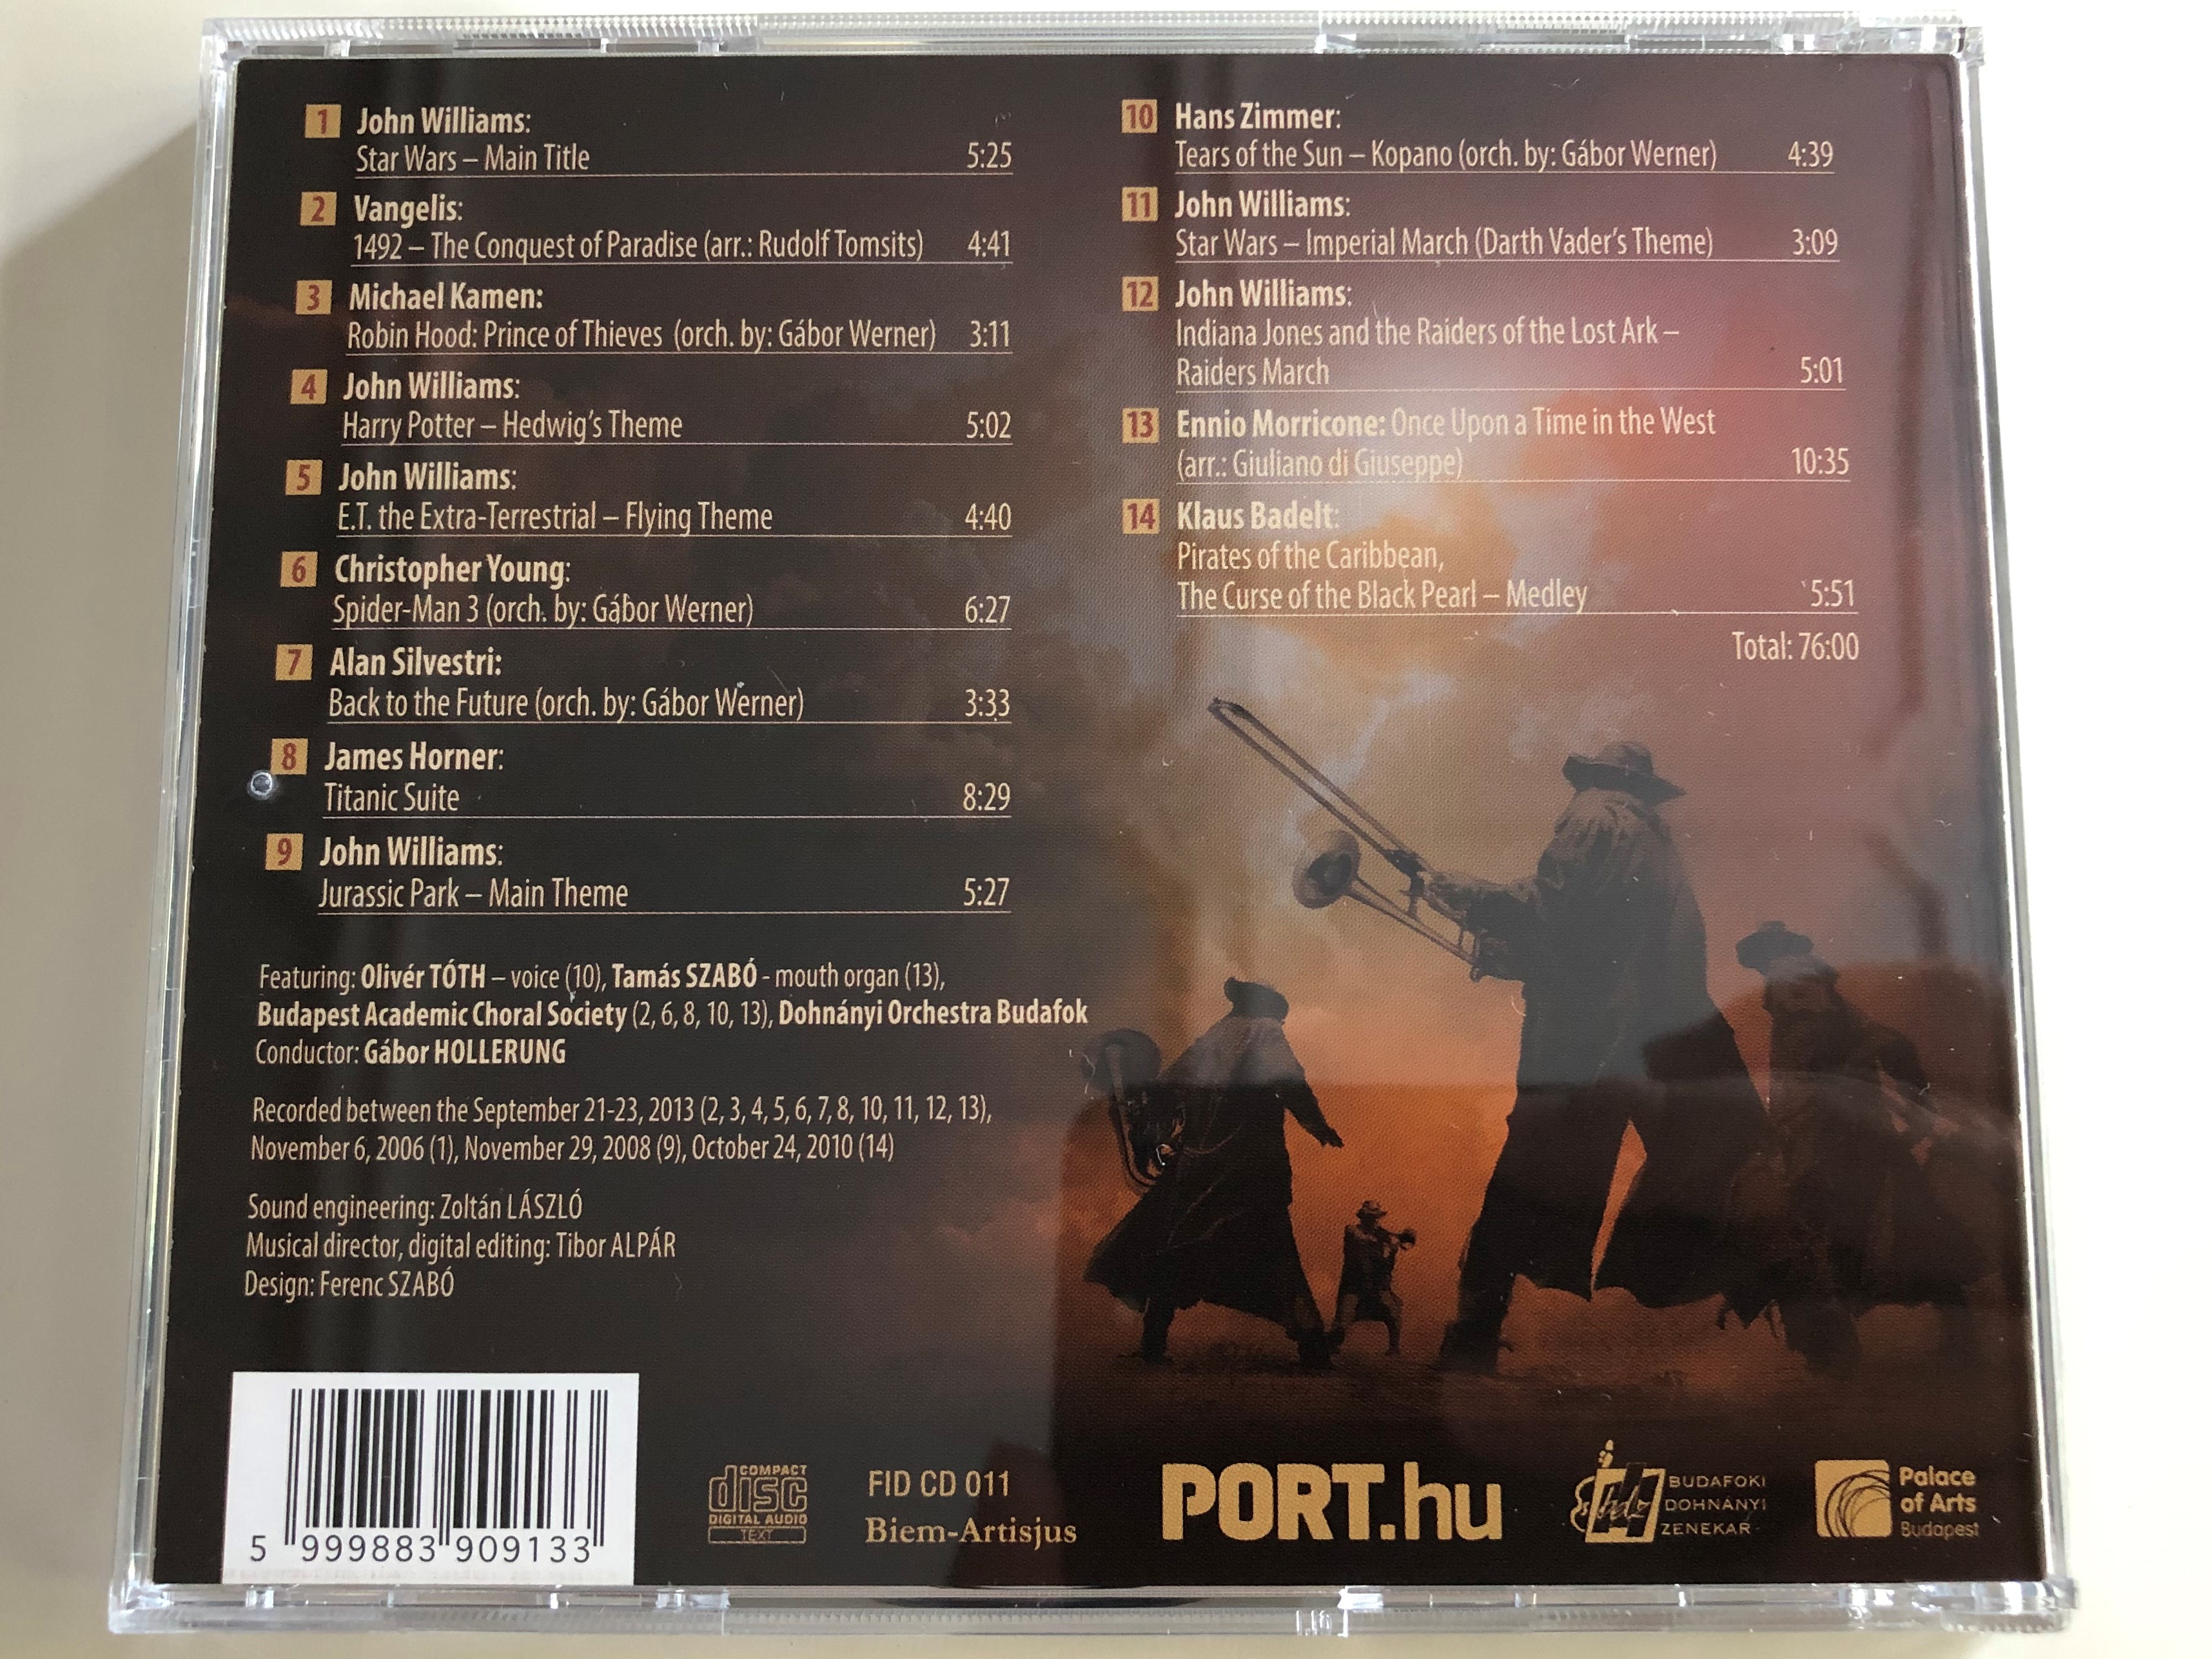 port.hu-presents-filmharmonic-audio-cd-2013-budafoki-dohn-nyi-zenekar-famous-movie-title-music-played-by-budapest-academic-choral-society-and-dohn-nyi-orchestra-budafok-conducted-by-g-bor-hollerung-fid-cd-011-8-.jpg